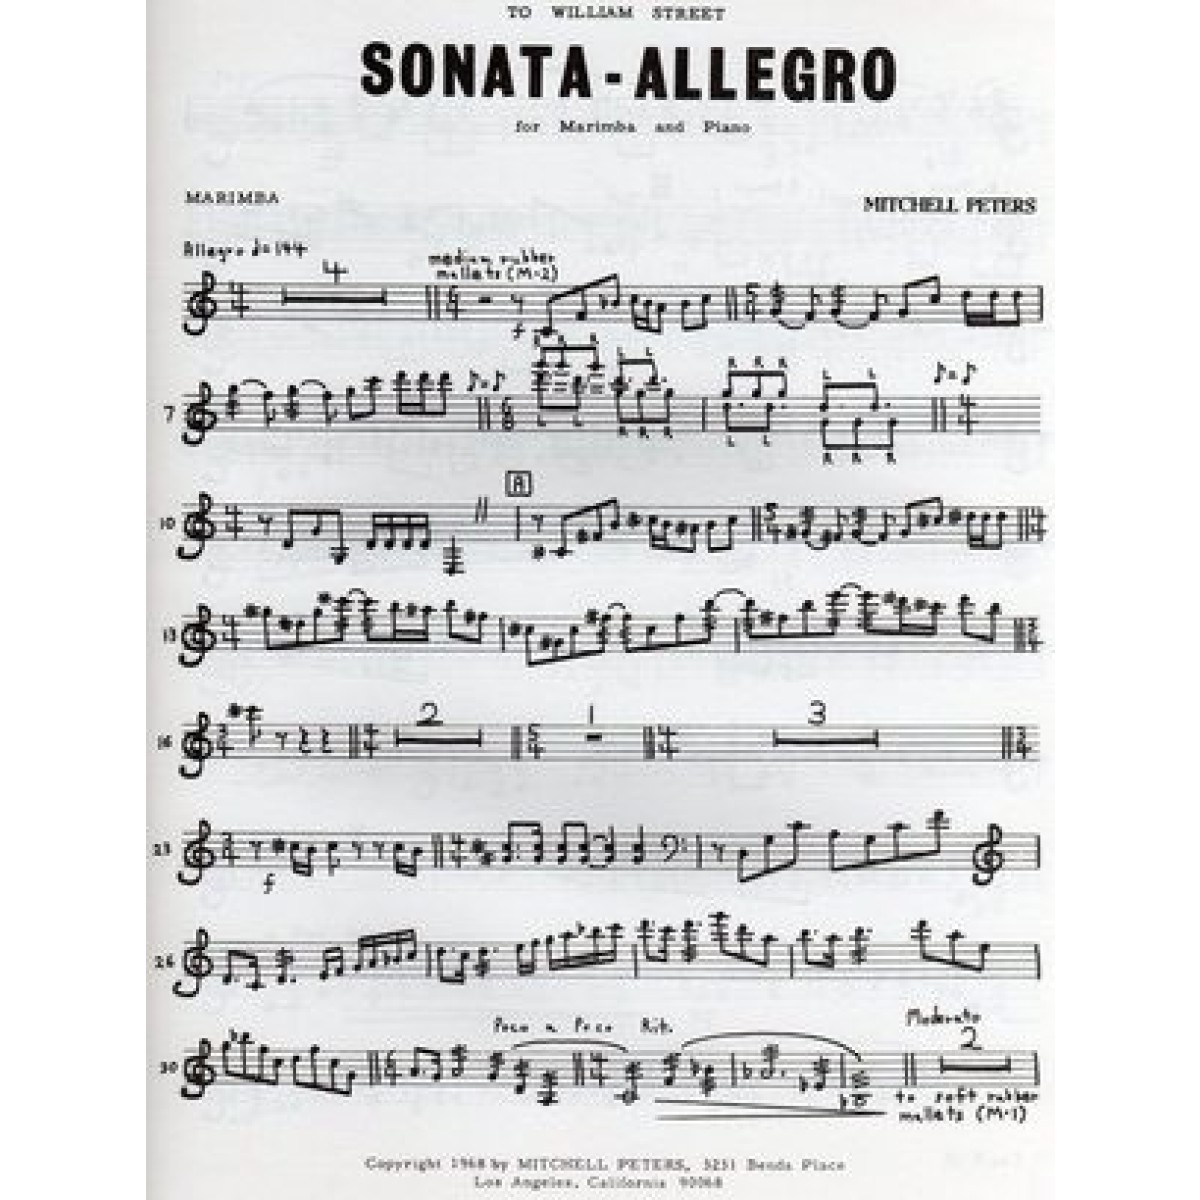 Sonata - Allegro by Mitchell Peters